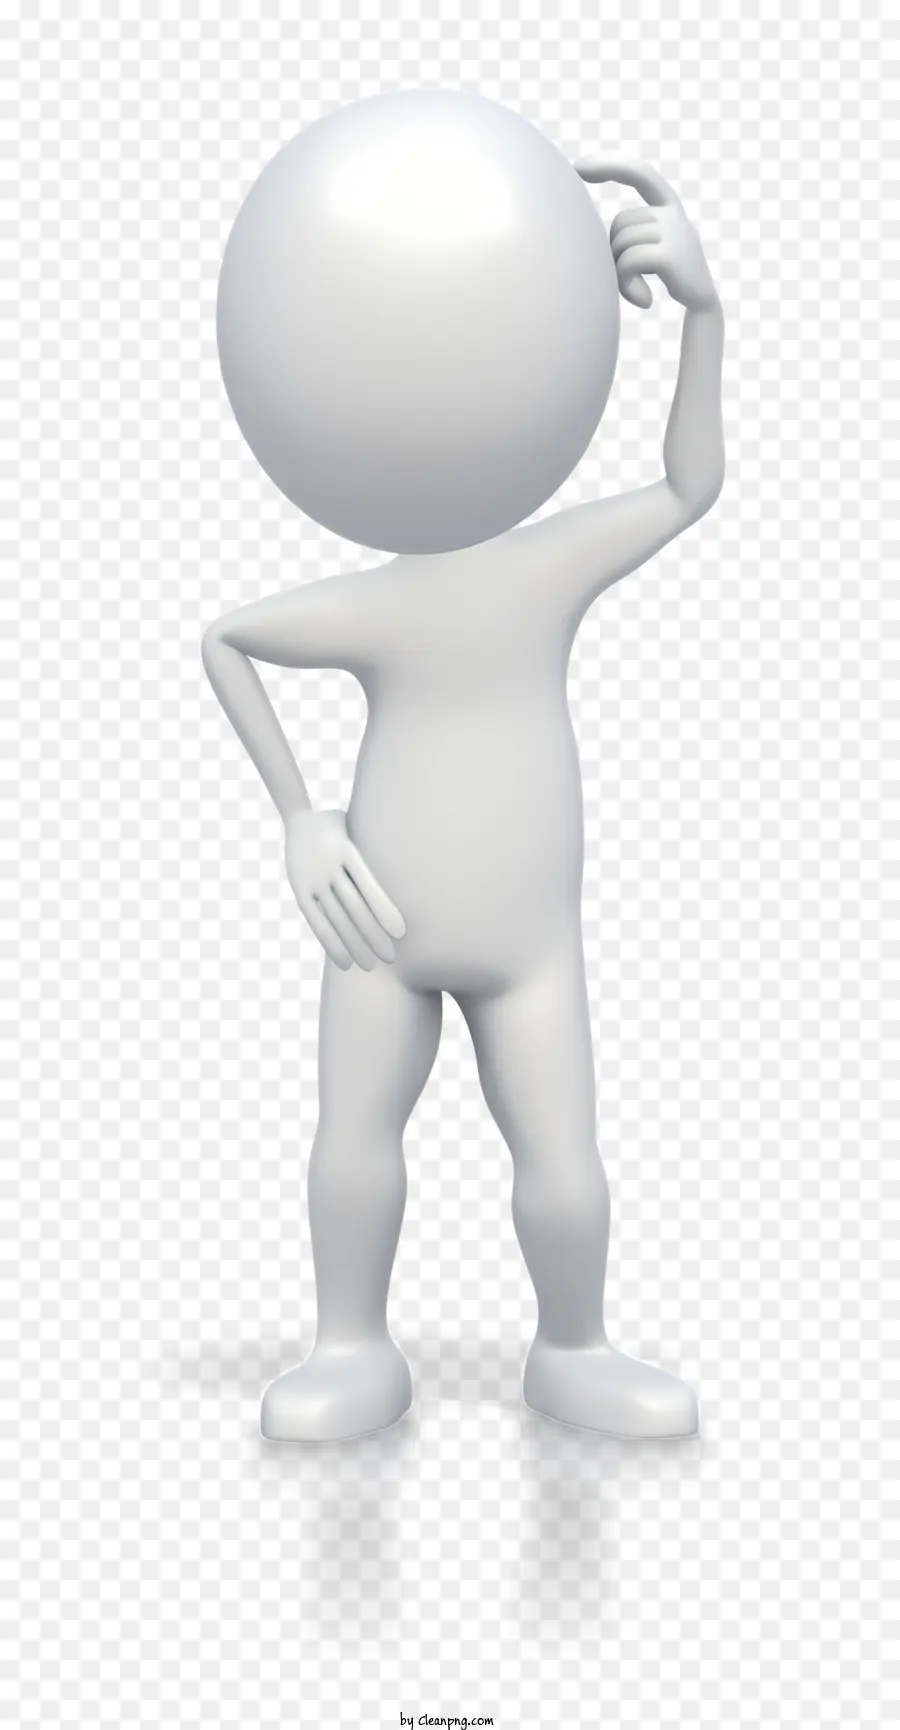 Stick Abbildung 3d Mann verschränkte Arme weiße Hemd schwarze Hosen - 3D -Mann im weißen Hemd nach unten schaut